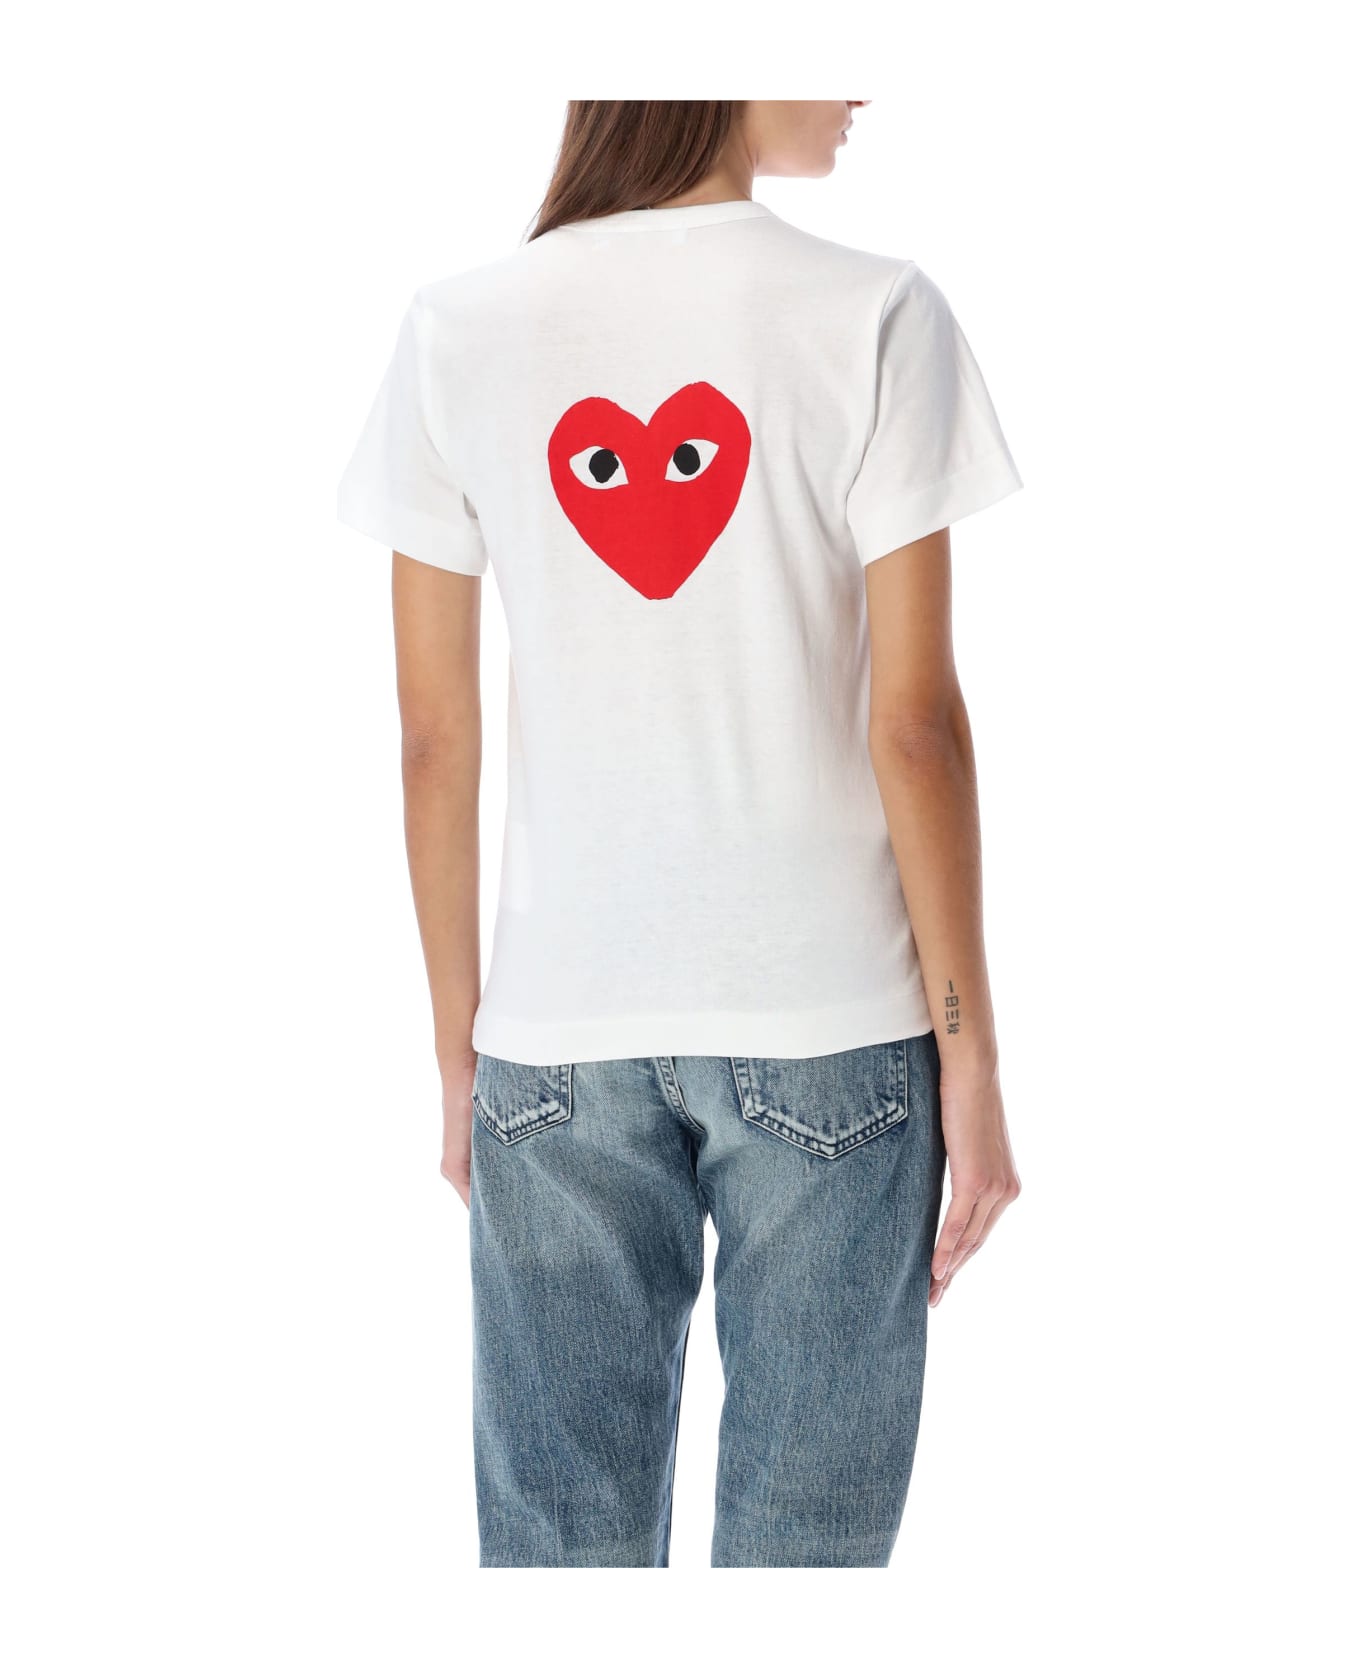 Comme des Garçons Play Big Red Heart T-shirt - WHITE/RED